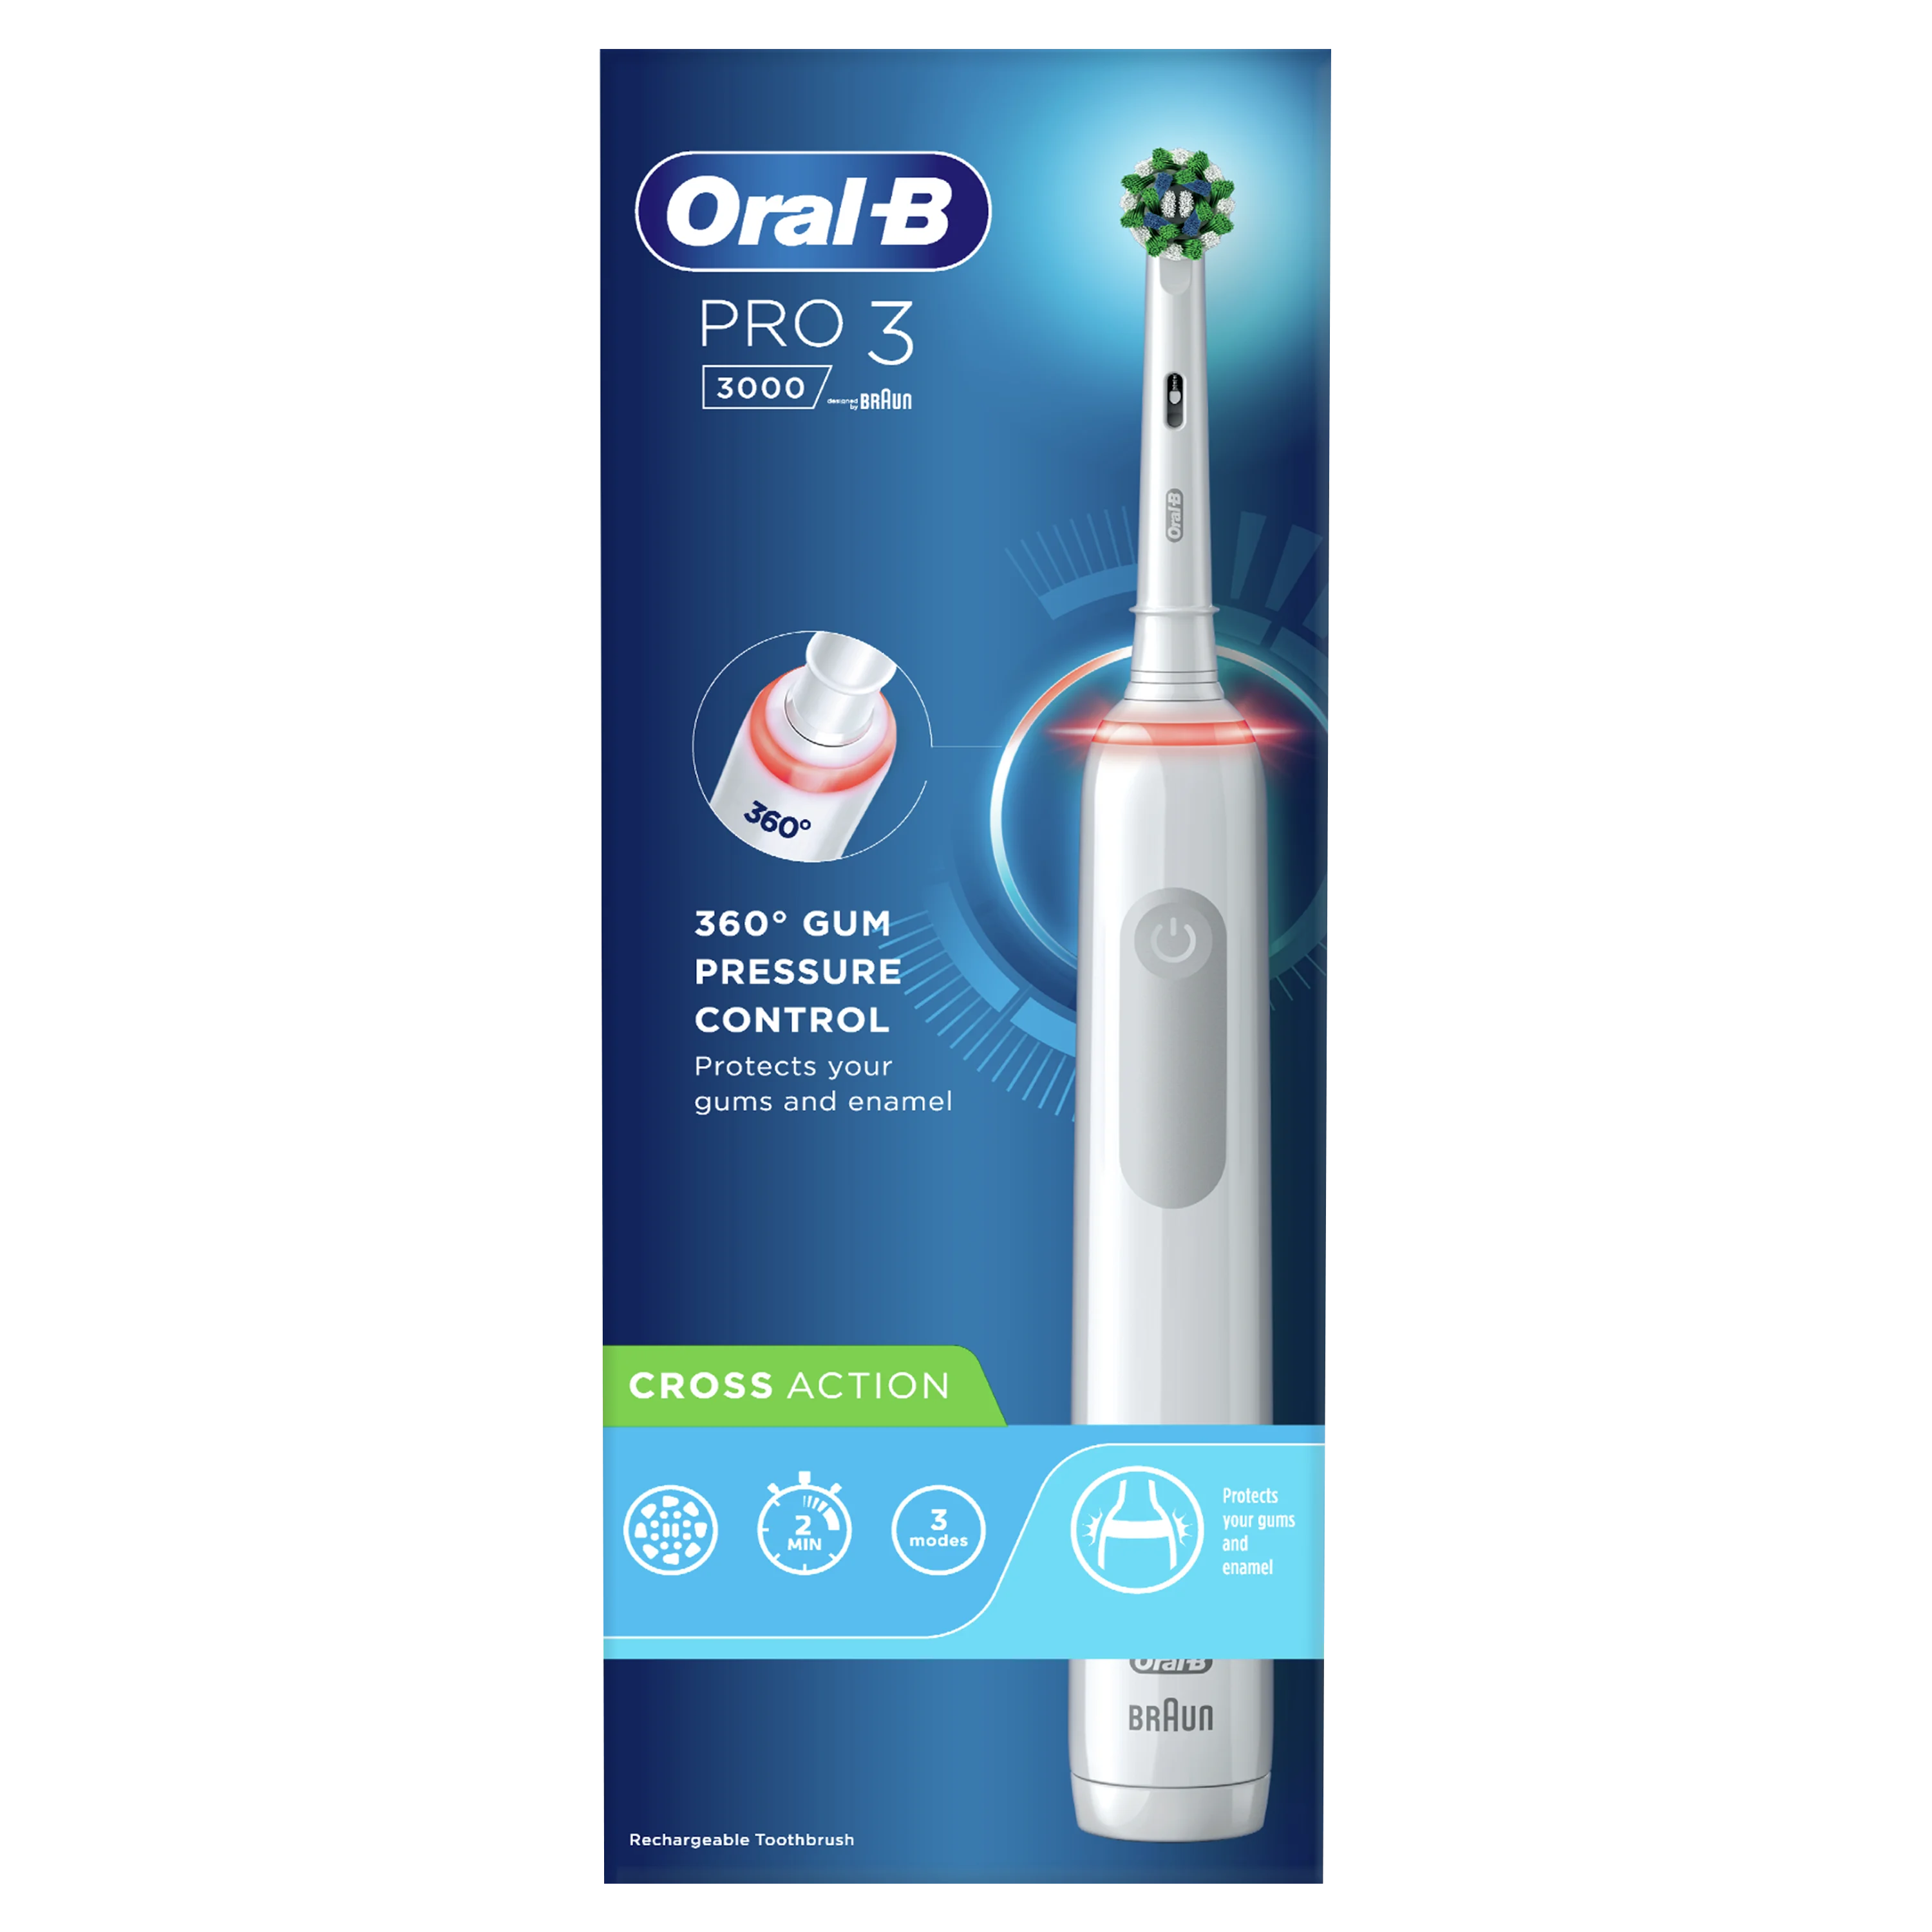 Chemie Voorwaarden Zichzelf Oral-B Pro 3 - 3000 CrossAction - Elektrische Tandenborstel | Oral-B